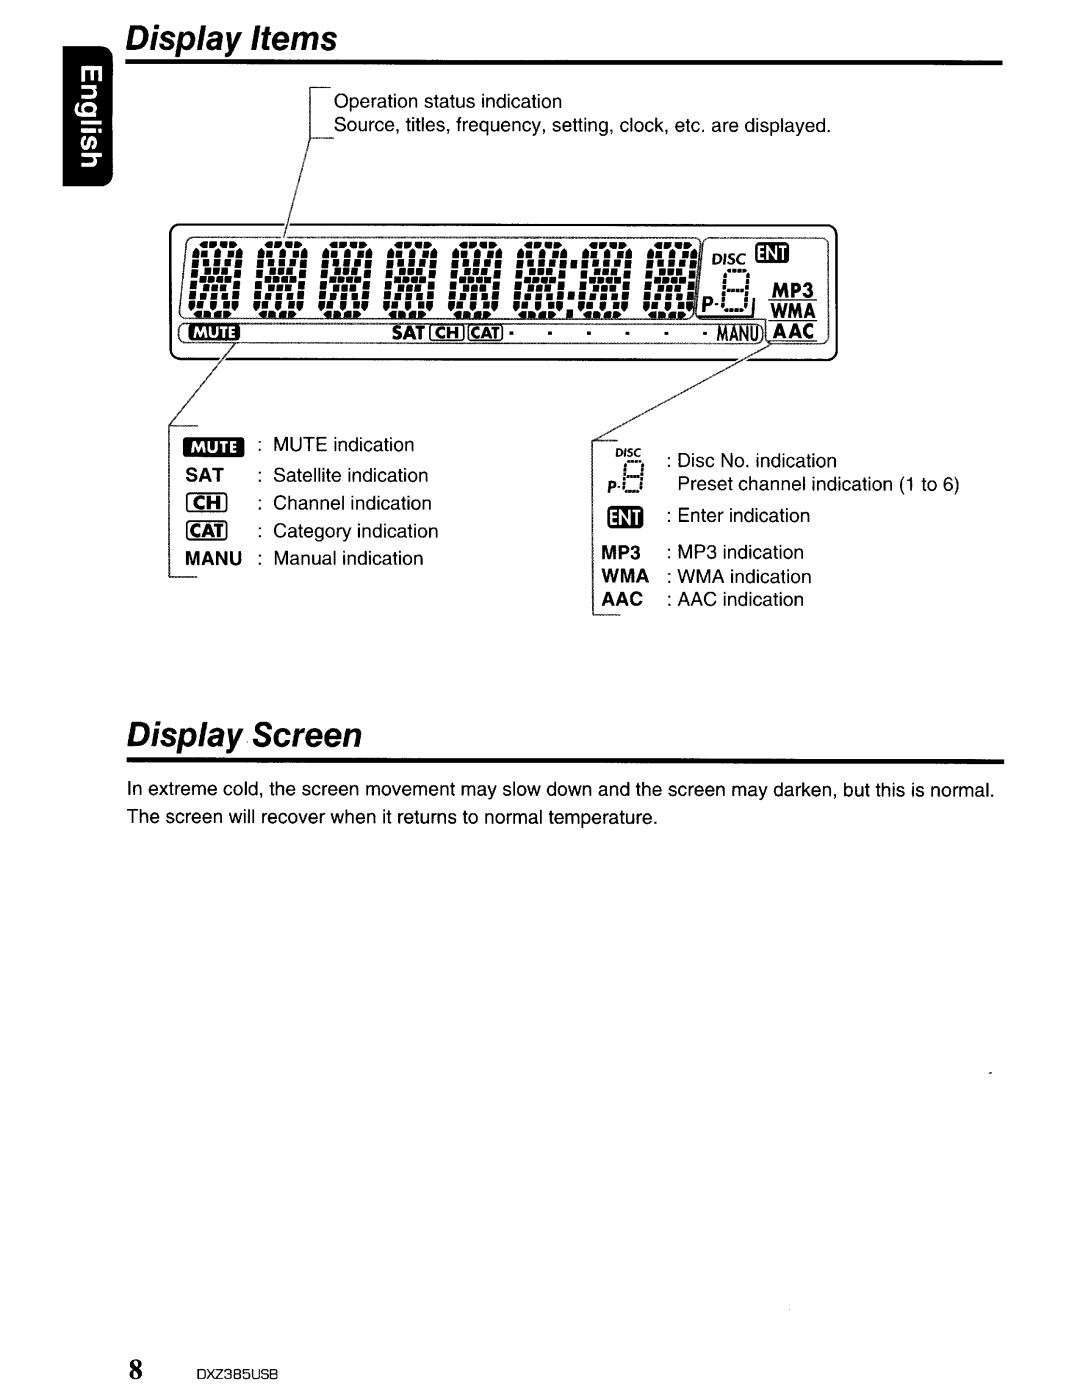 Clarion DXZ385US8 owner manual Display Items, Display Screen, lIn lIn, ••••••••••, • •••, •.•••• 